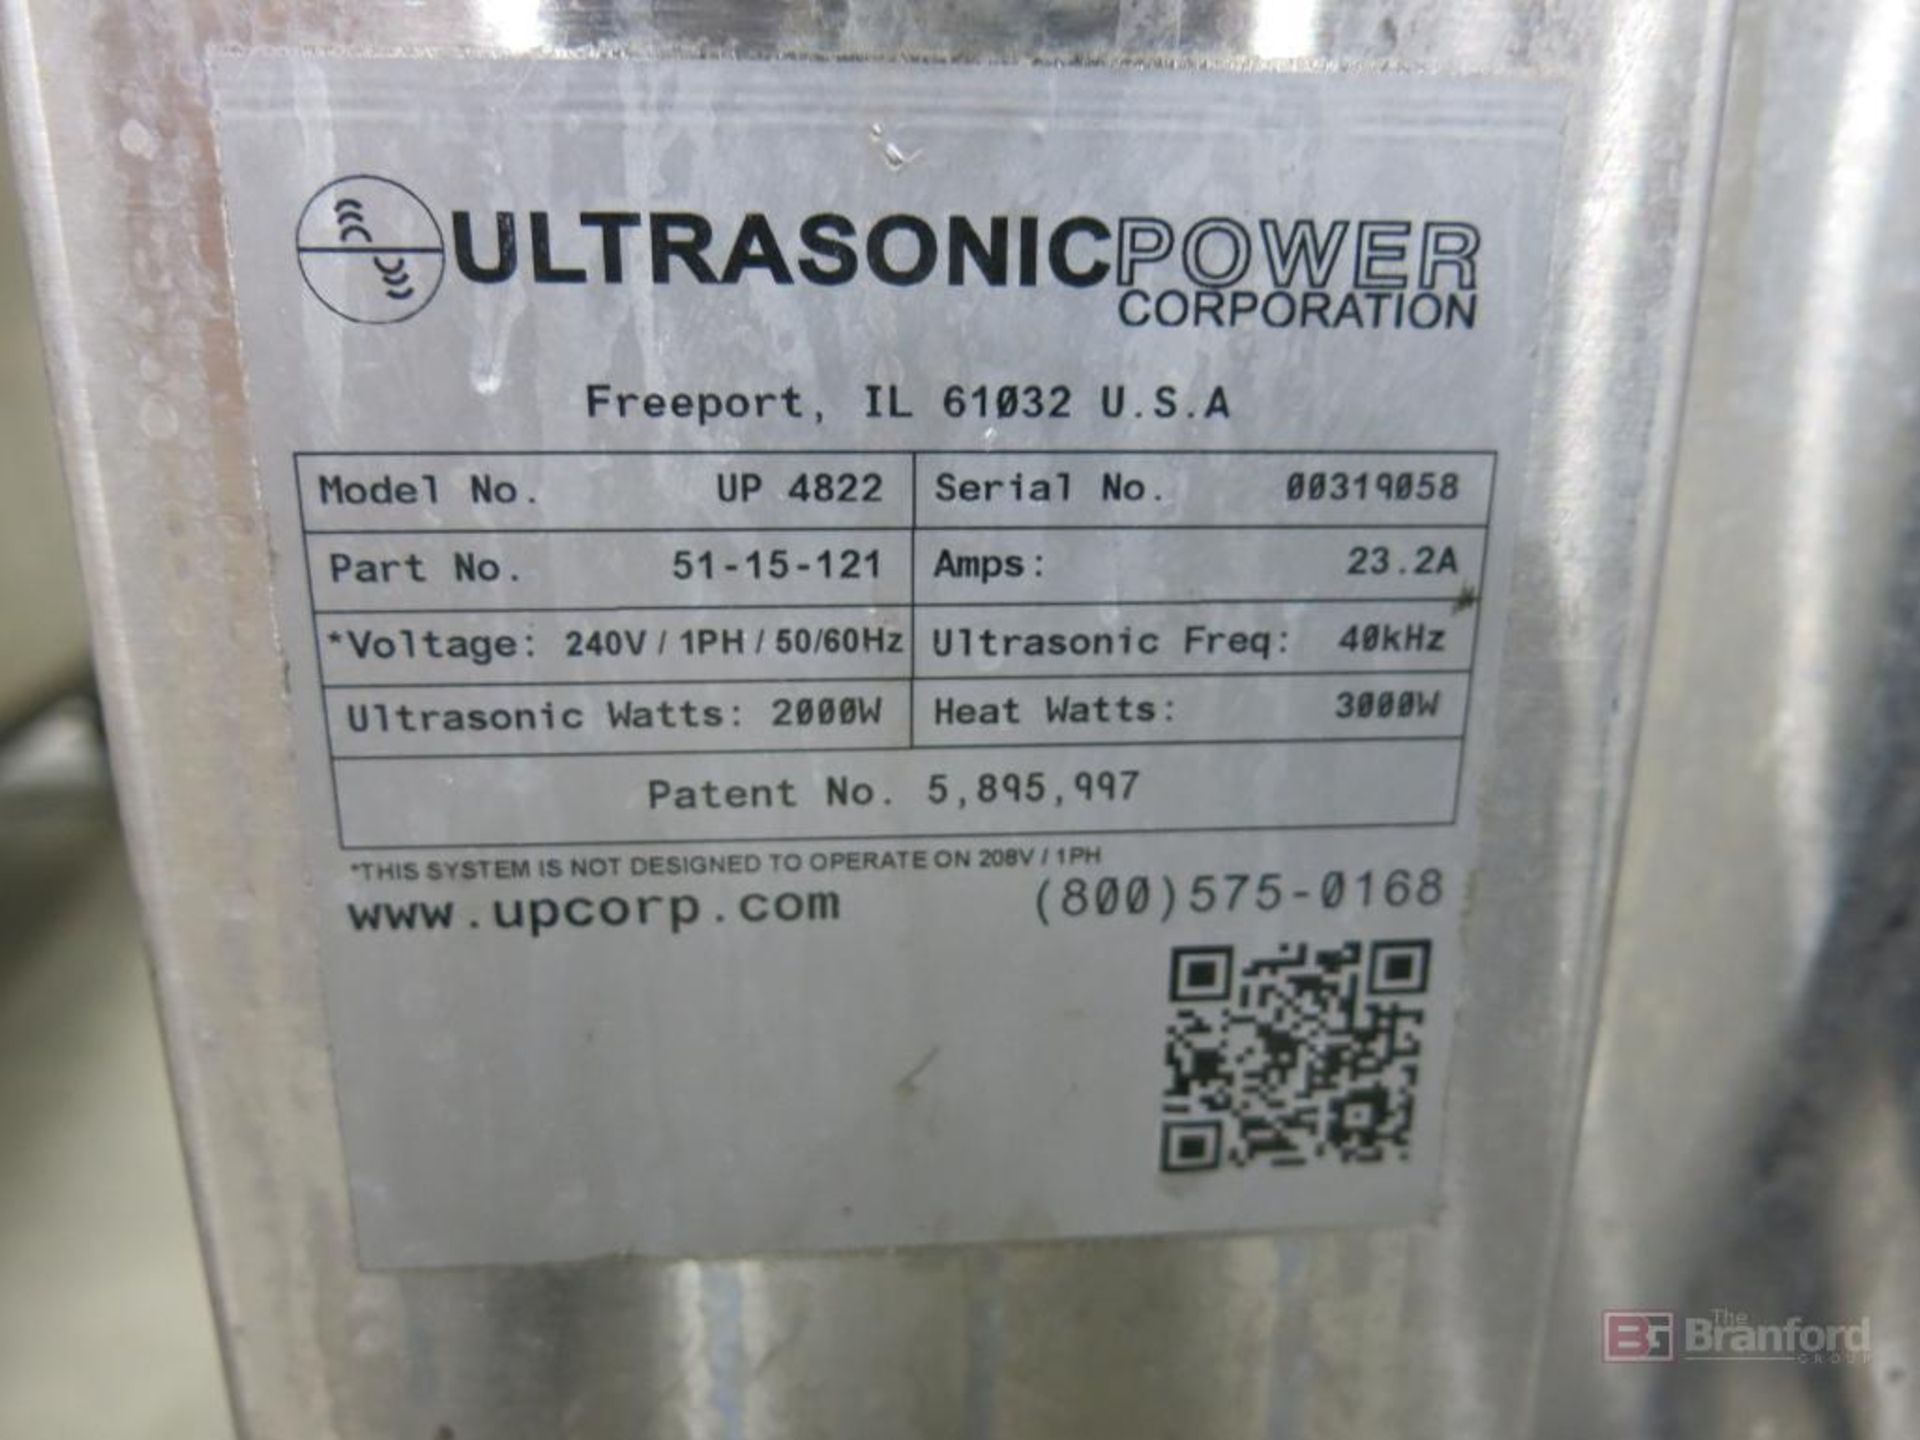 Ultrasonic Power Corp. 48" x 22" Ultrasonic Cleaner, Model UP4822 - Image 5 of 5